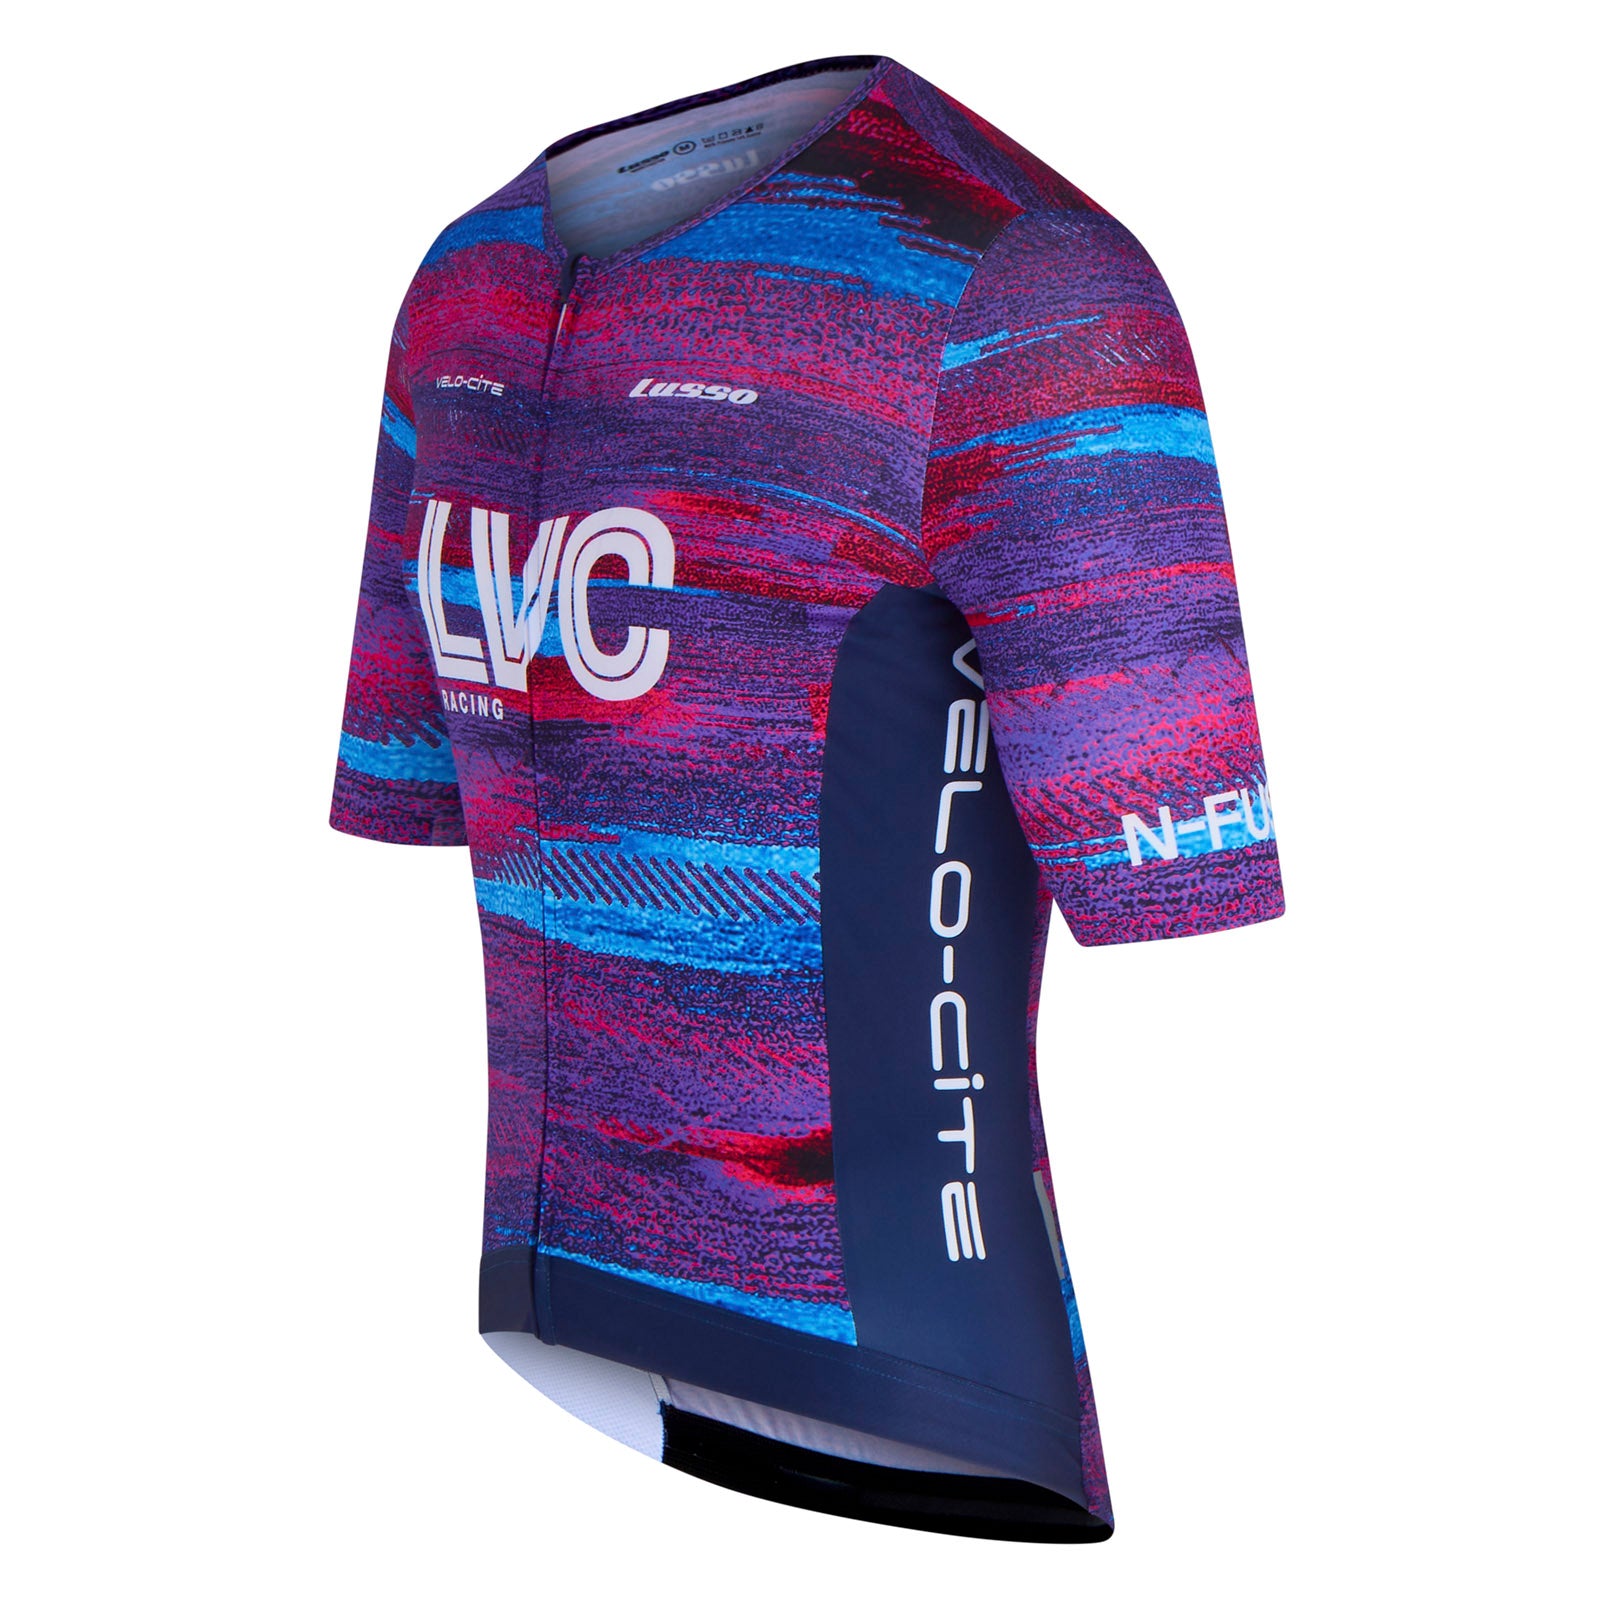 LVC racing aero jersey - Lusso Cycle Wear